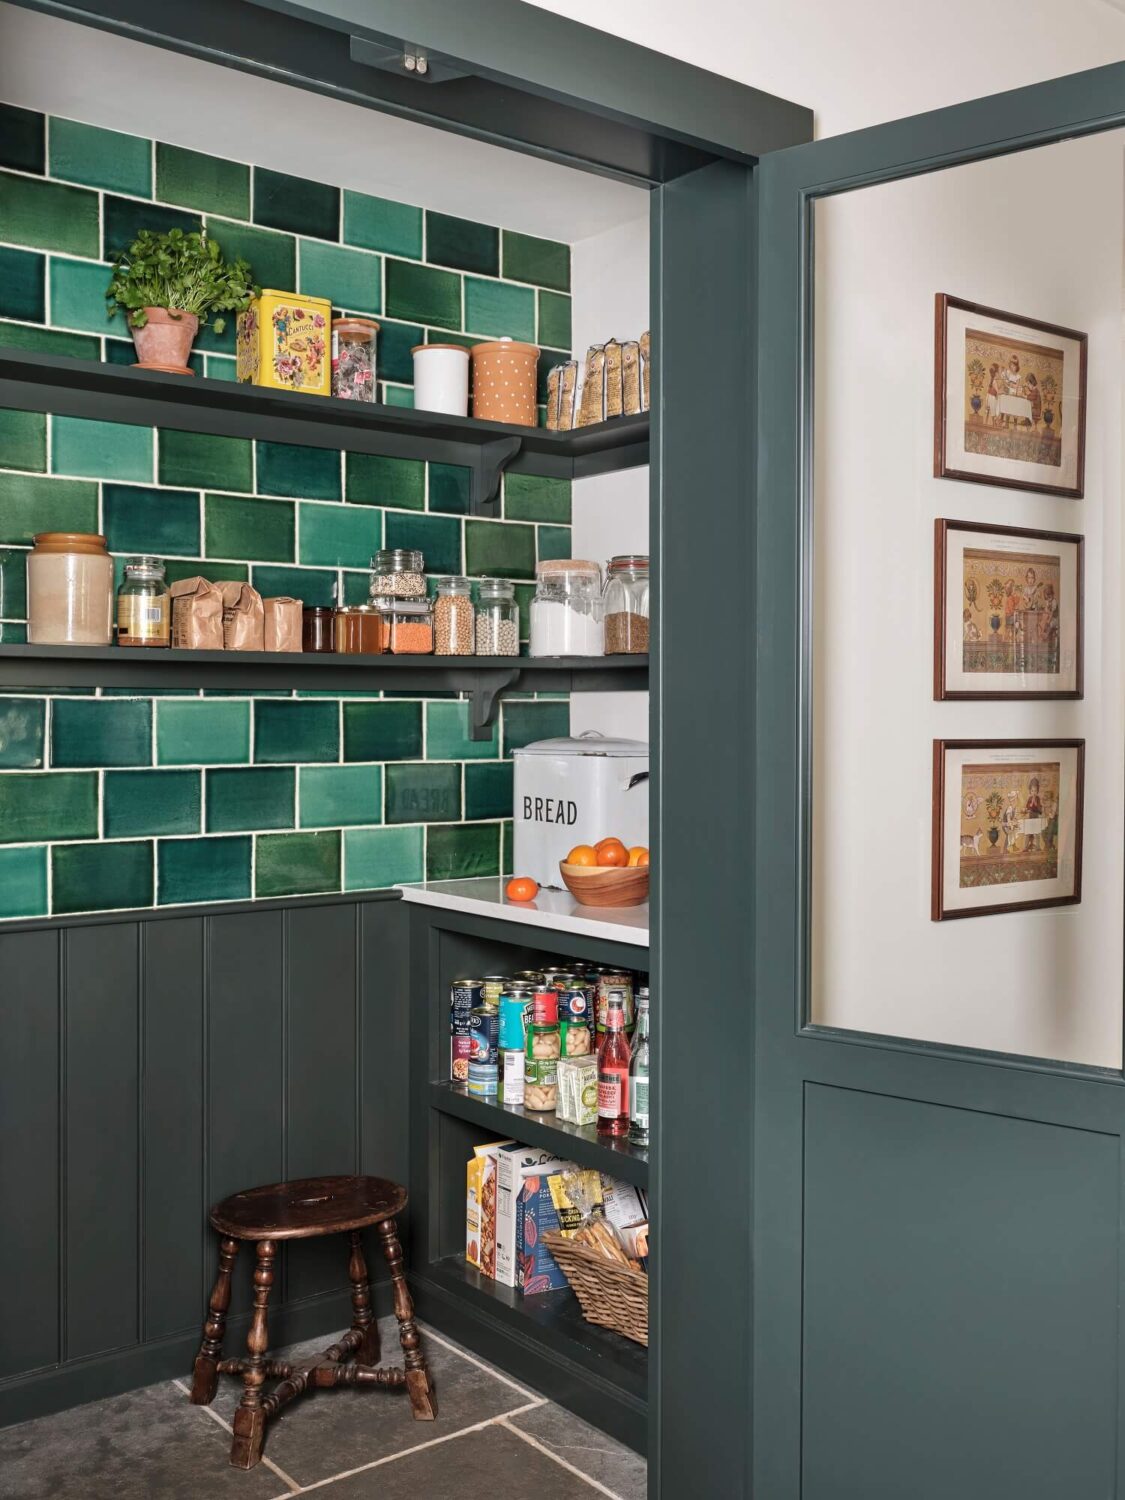 pantry-green-tiles-open-shelves-devol-kitchen-nordroom